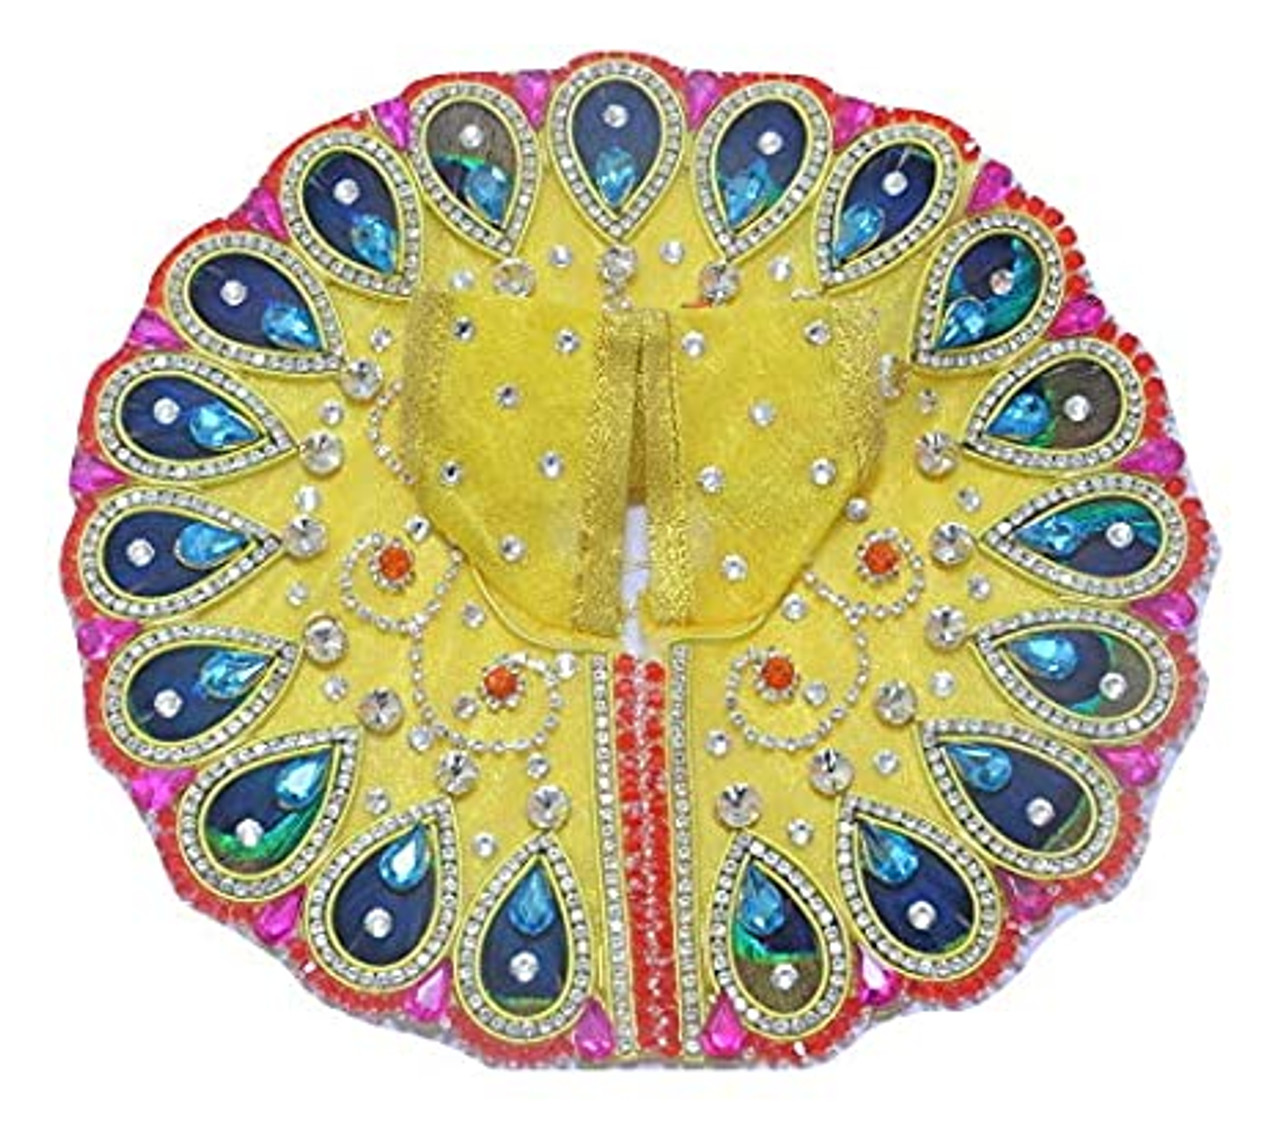 4 Inch Silk Laddu Gopal Poshak, For Temple at Rs 30/piece in Vrindavan |  ID: 2852692116233